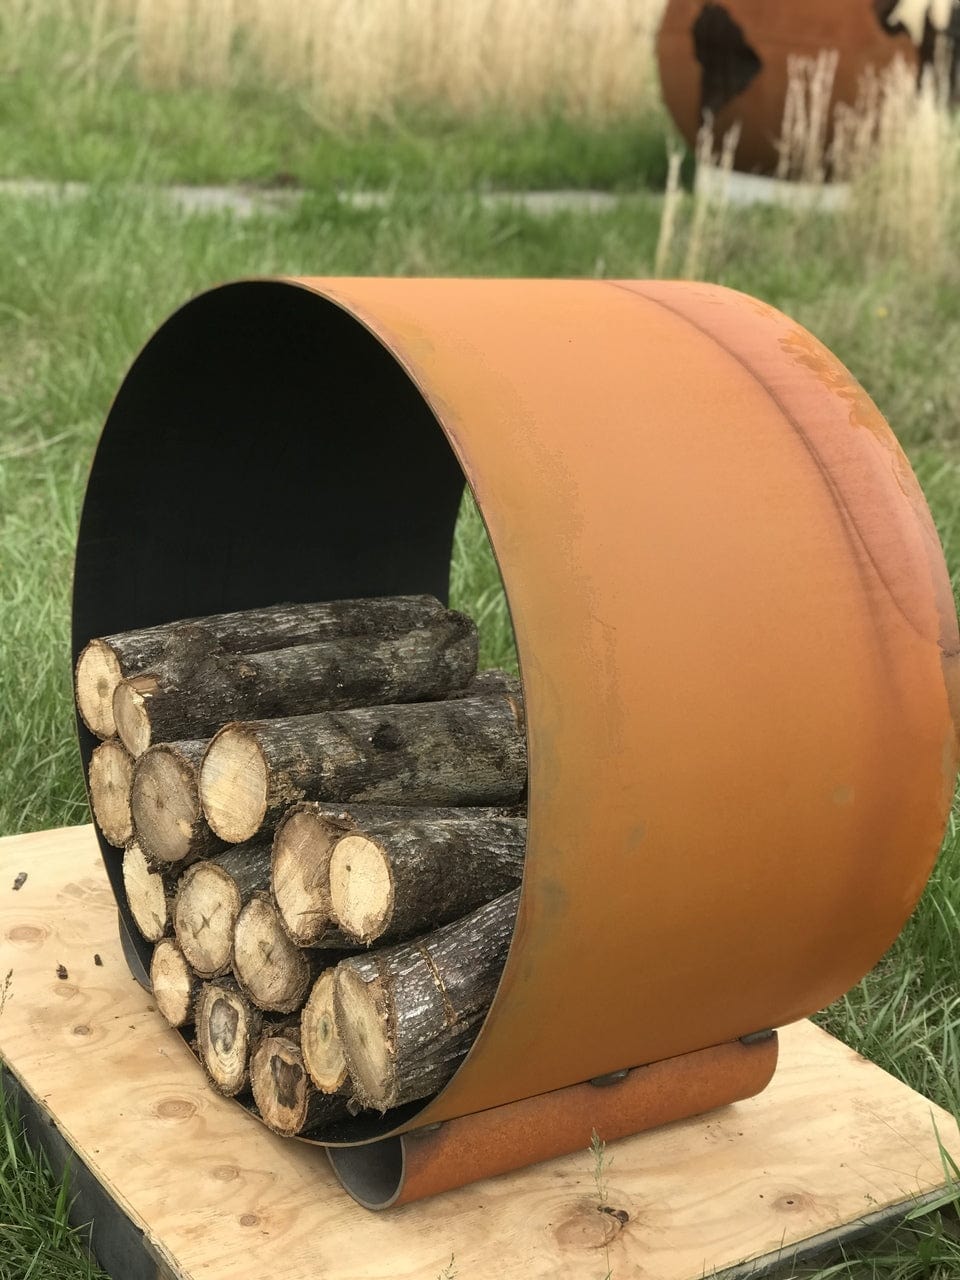 Fire Pit Art - The Orbit - Round Steel Log Rack Fire Pit Art